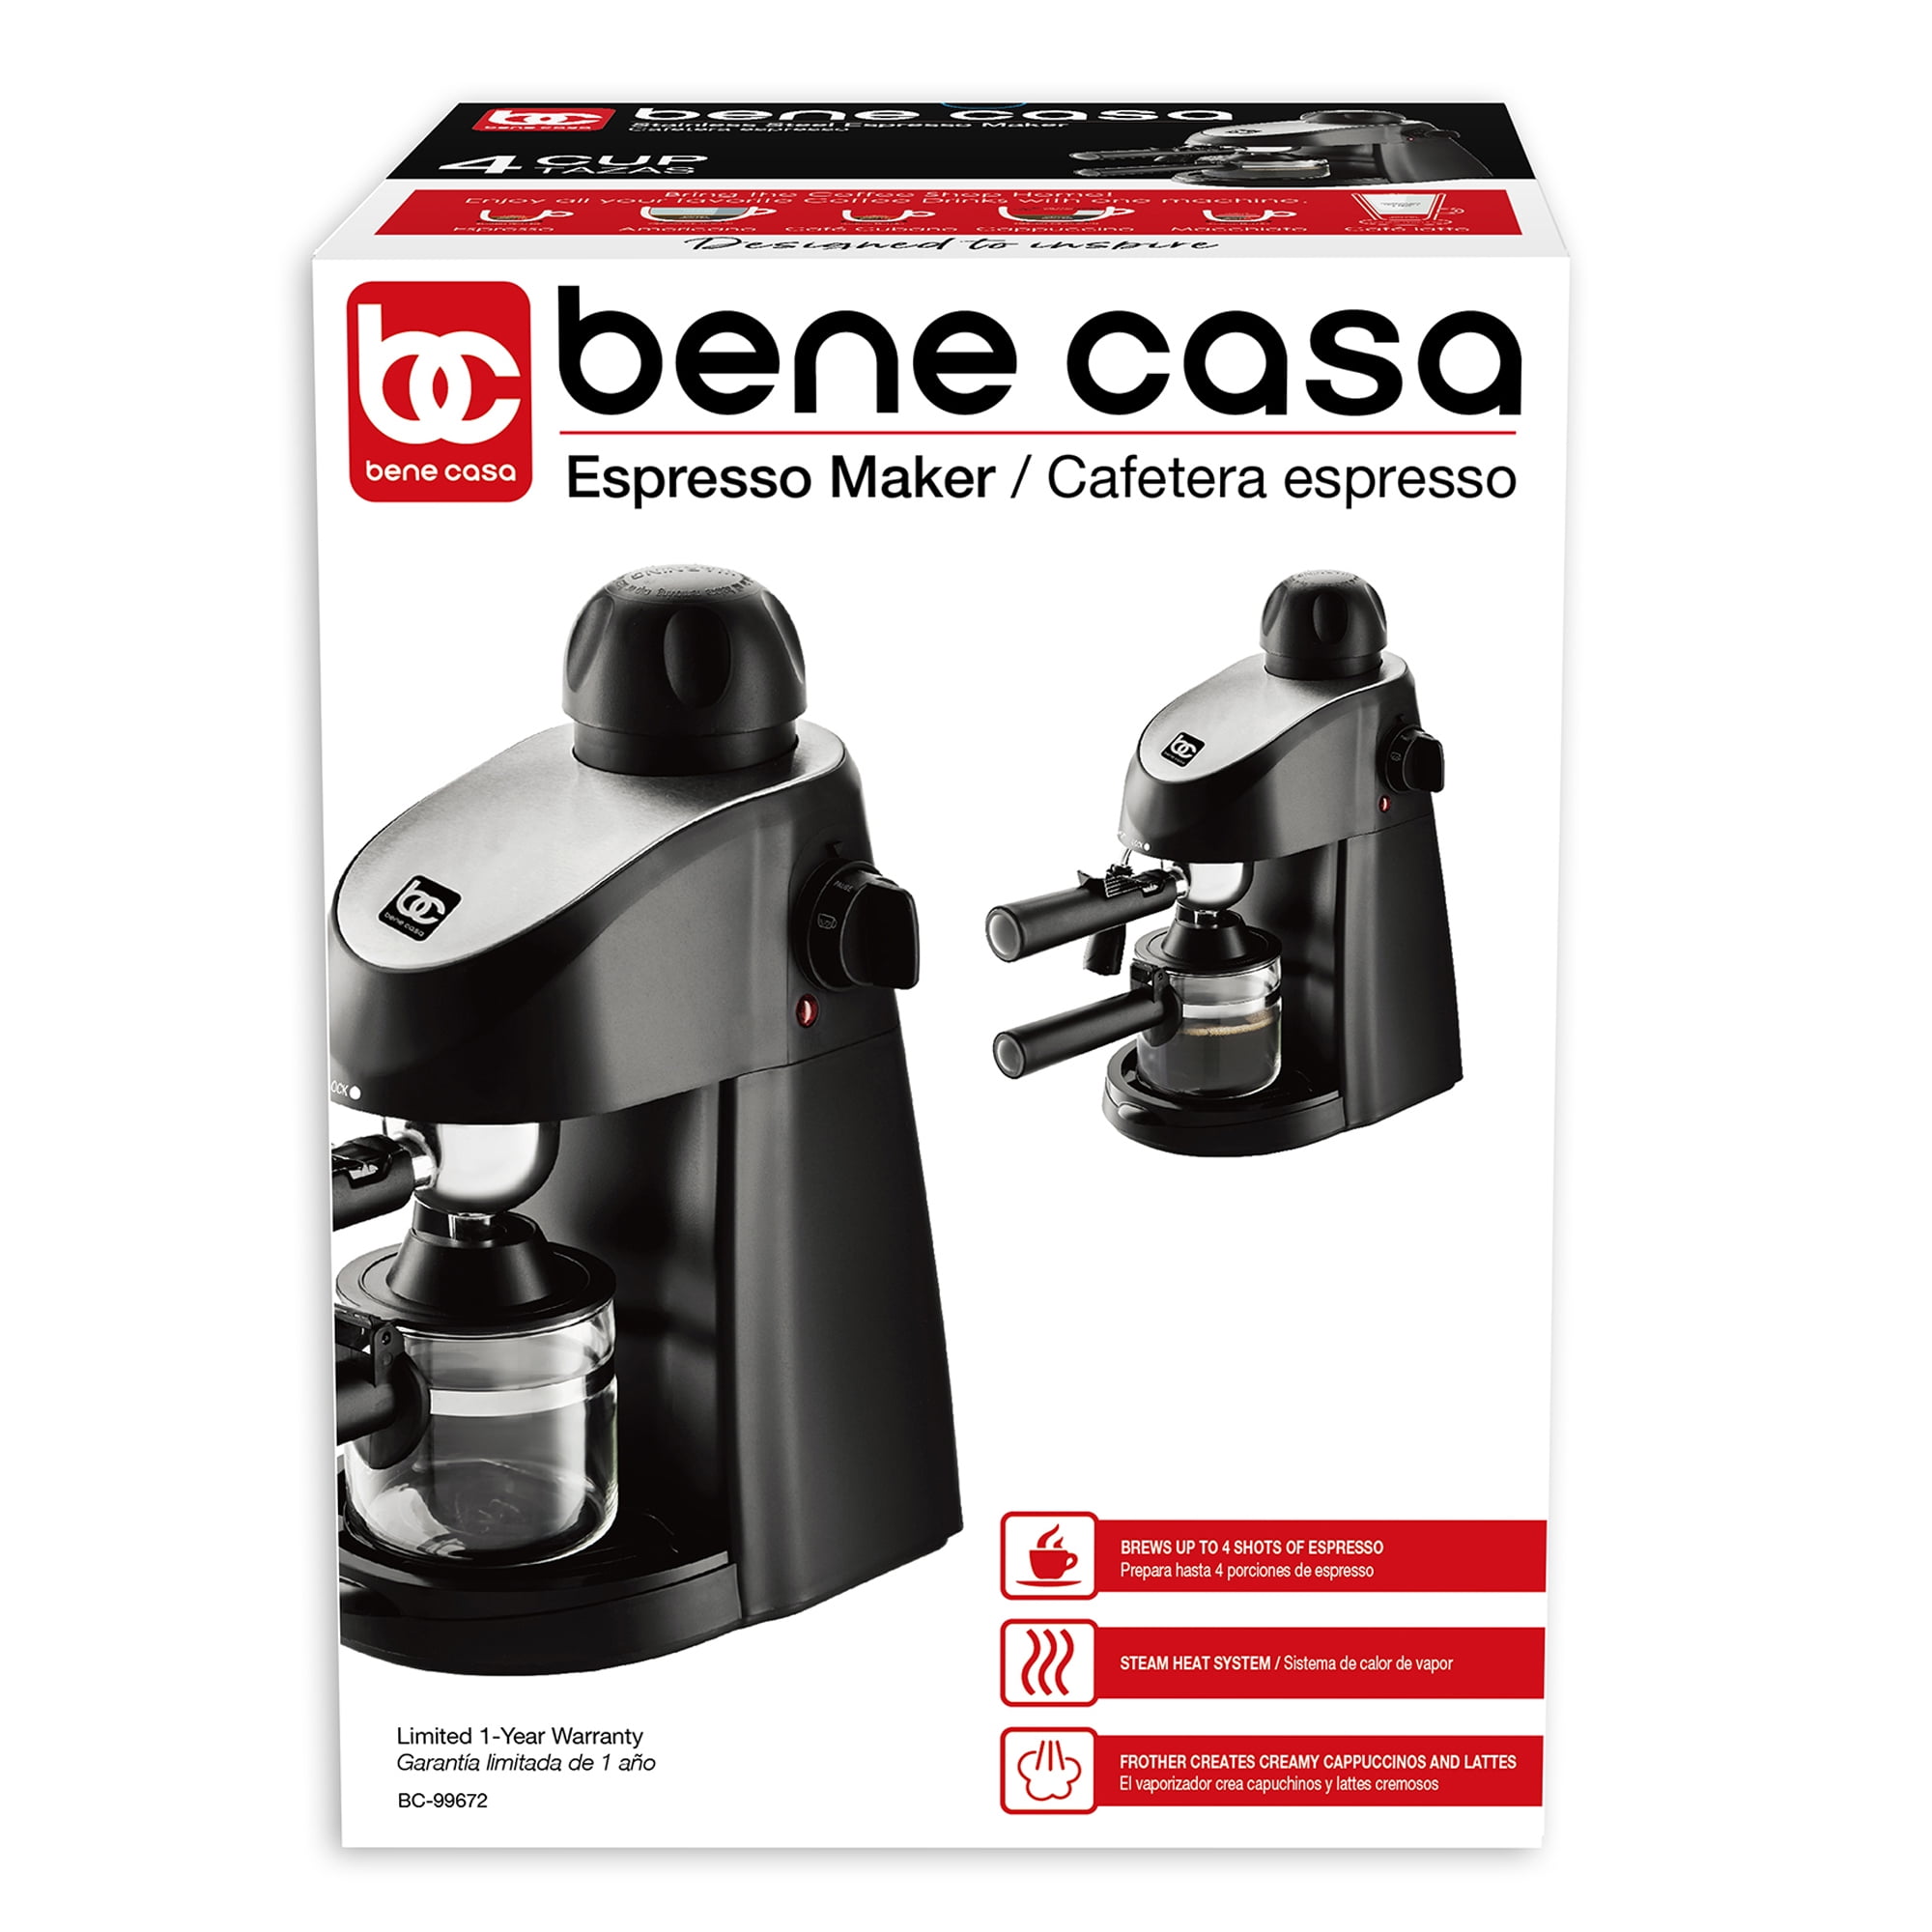 Bene Casa 4-cup espresso maker, black, milk frother, glass carafe